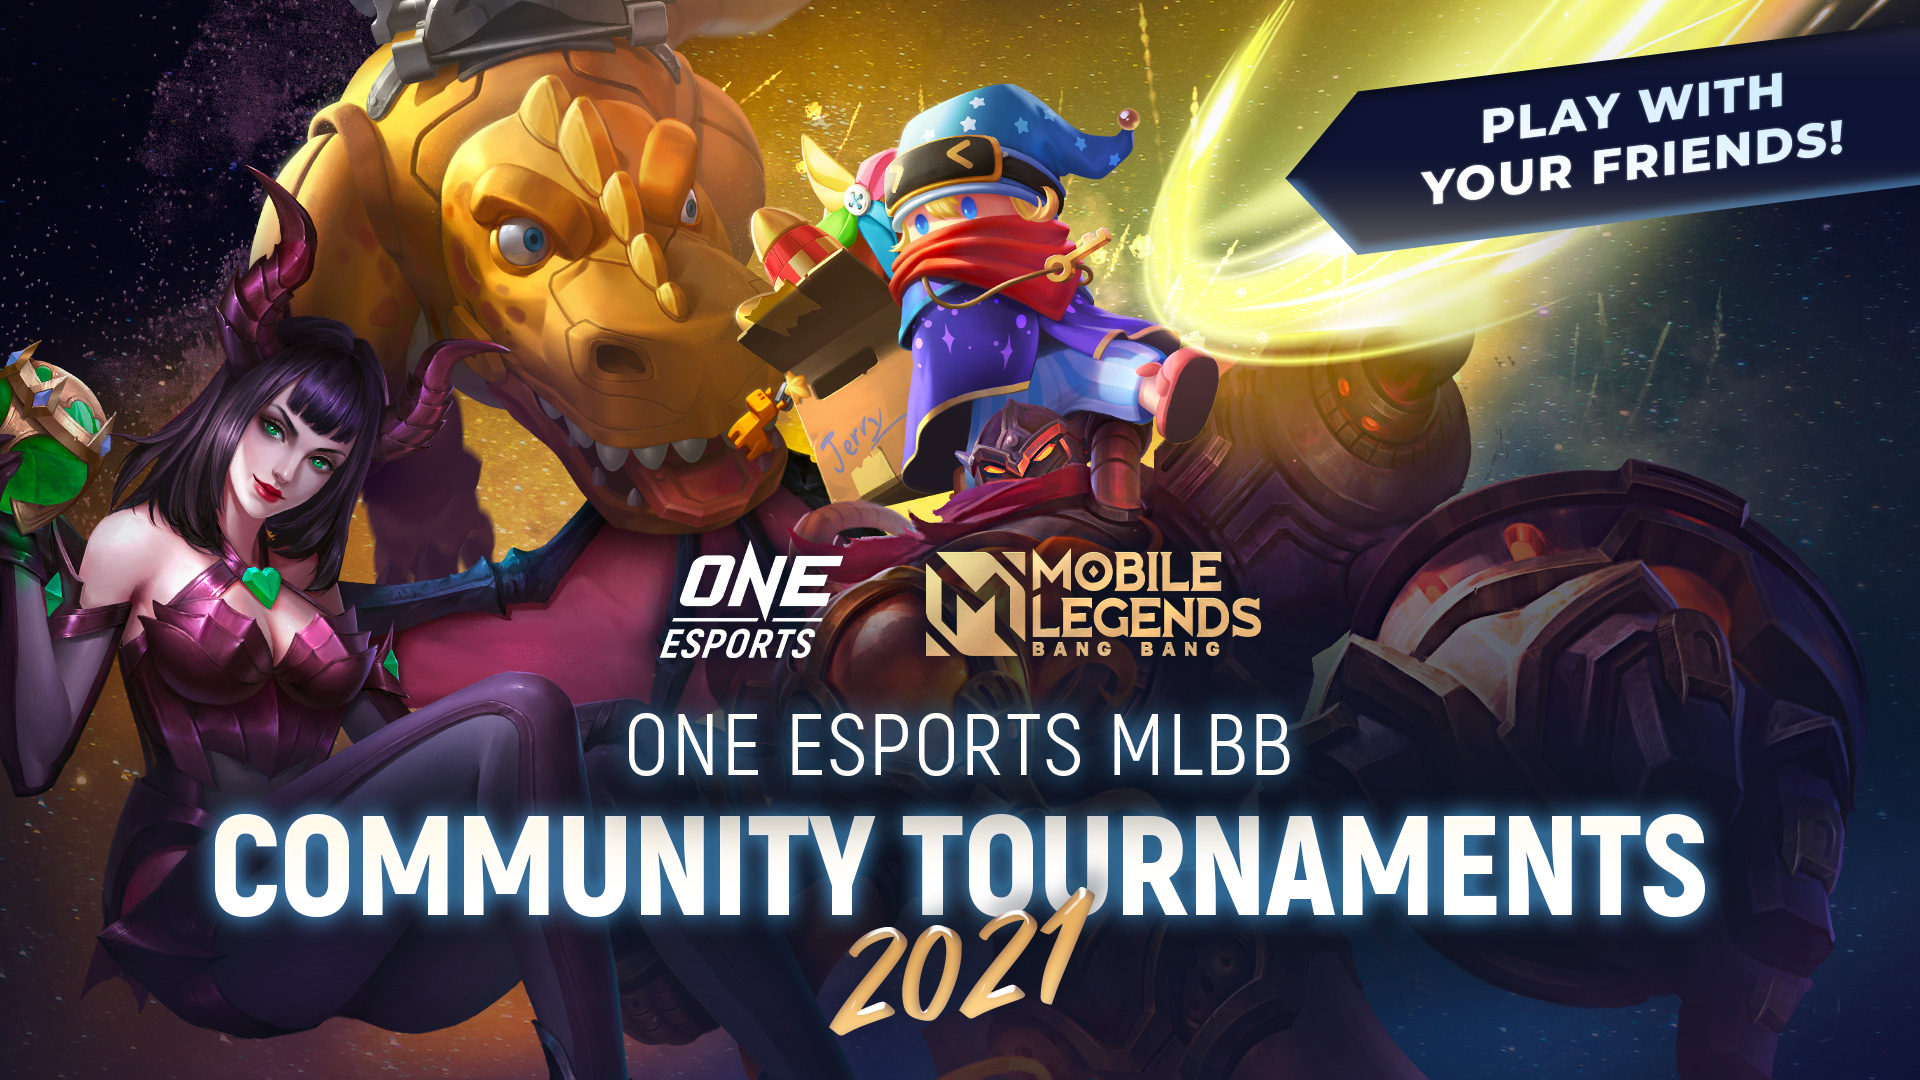 ONE Esports Community Tournaments